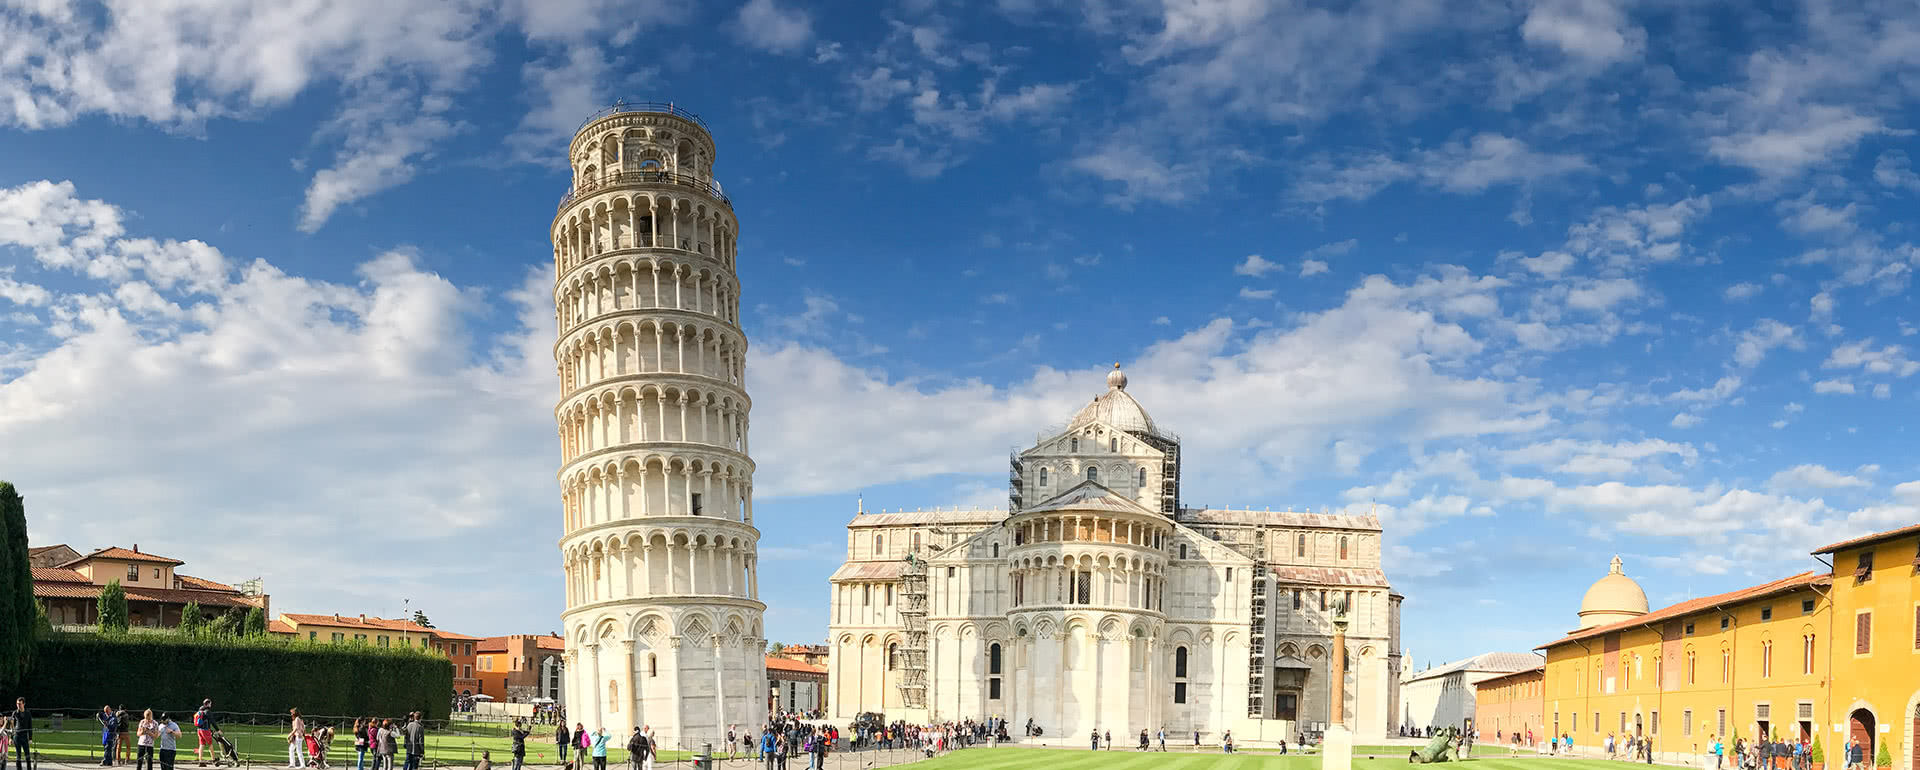 Coverbild von Pisa